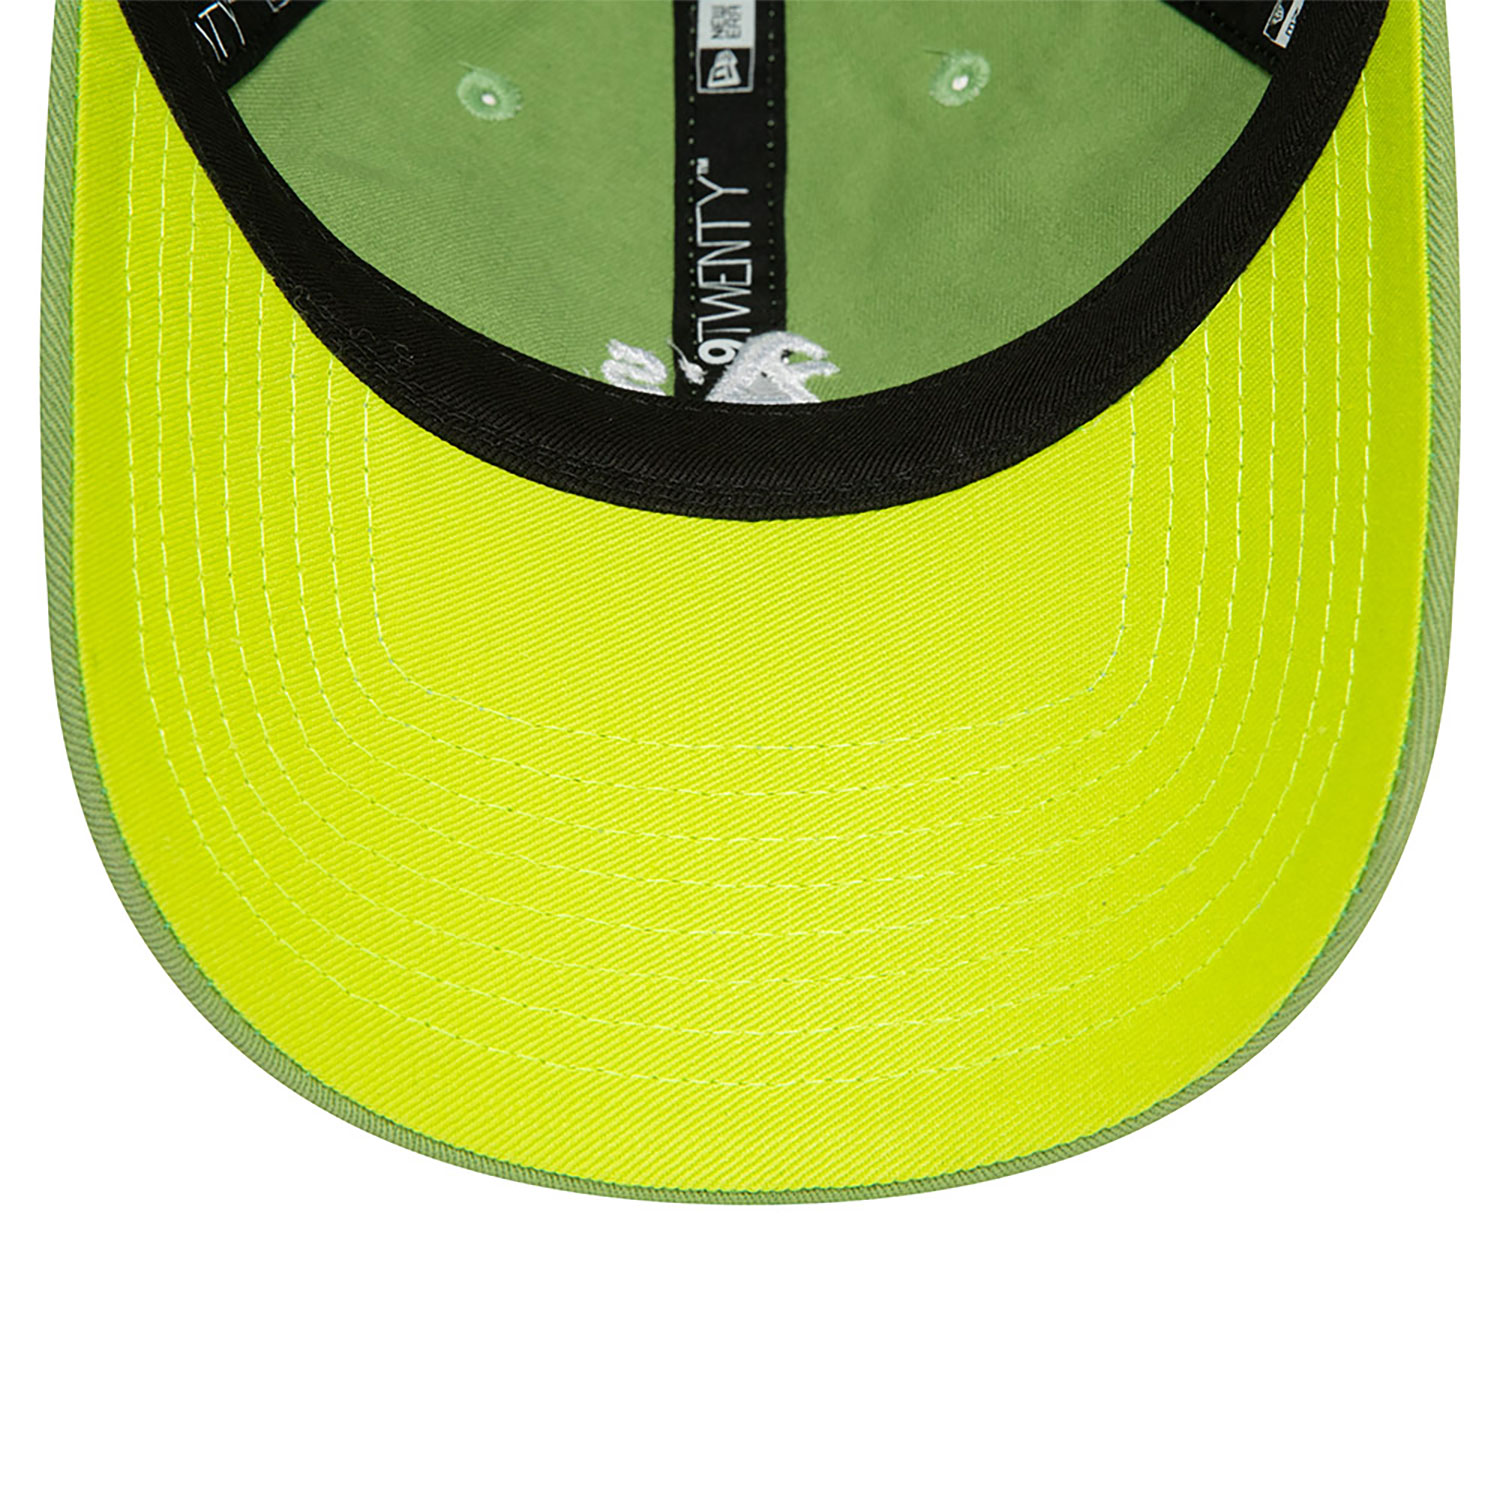 Oakland Athletics Style Activist Green 9TWENTY Adjustable Cap